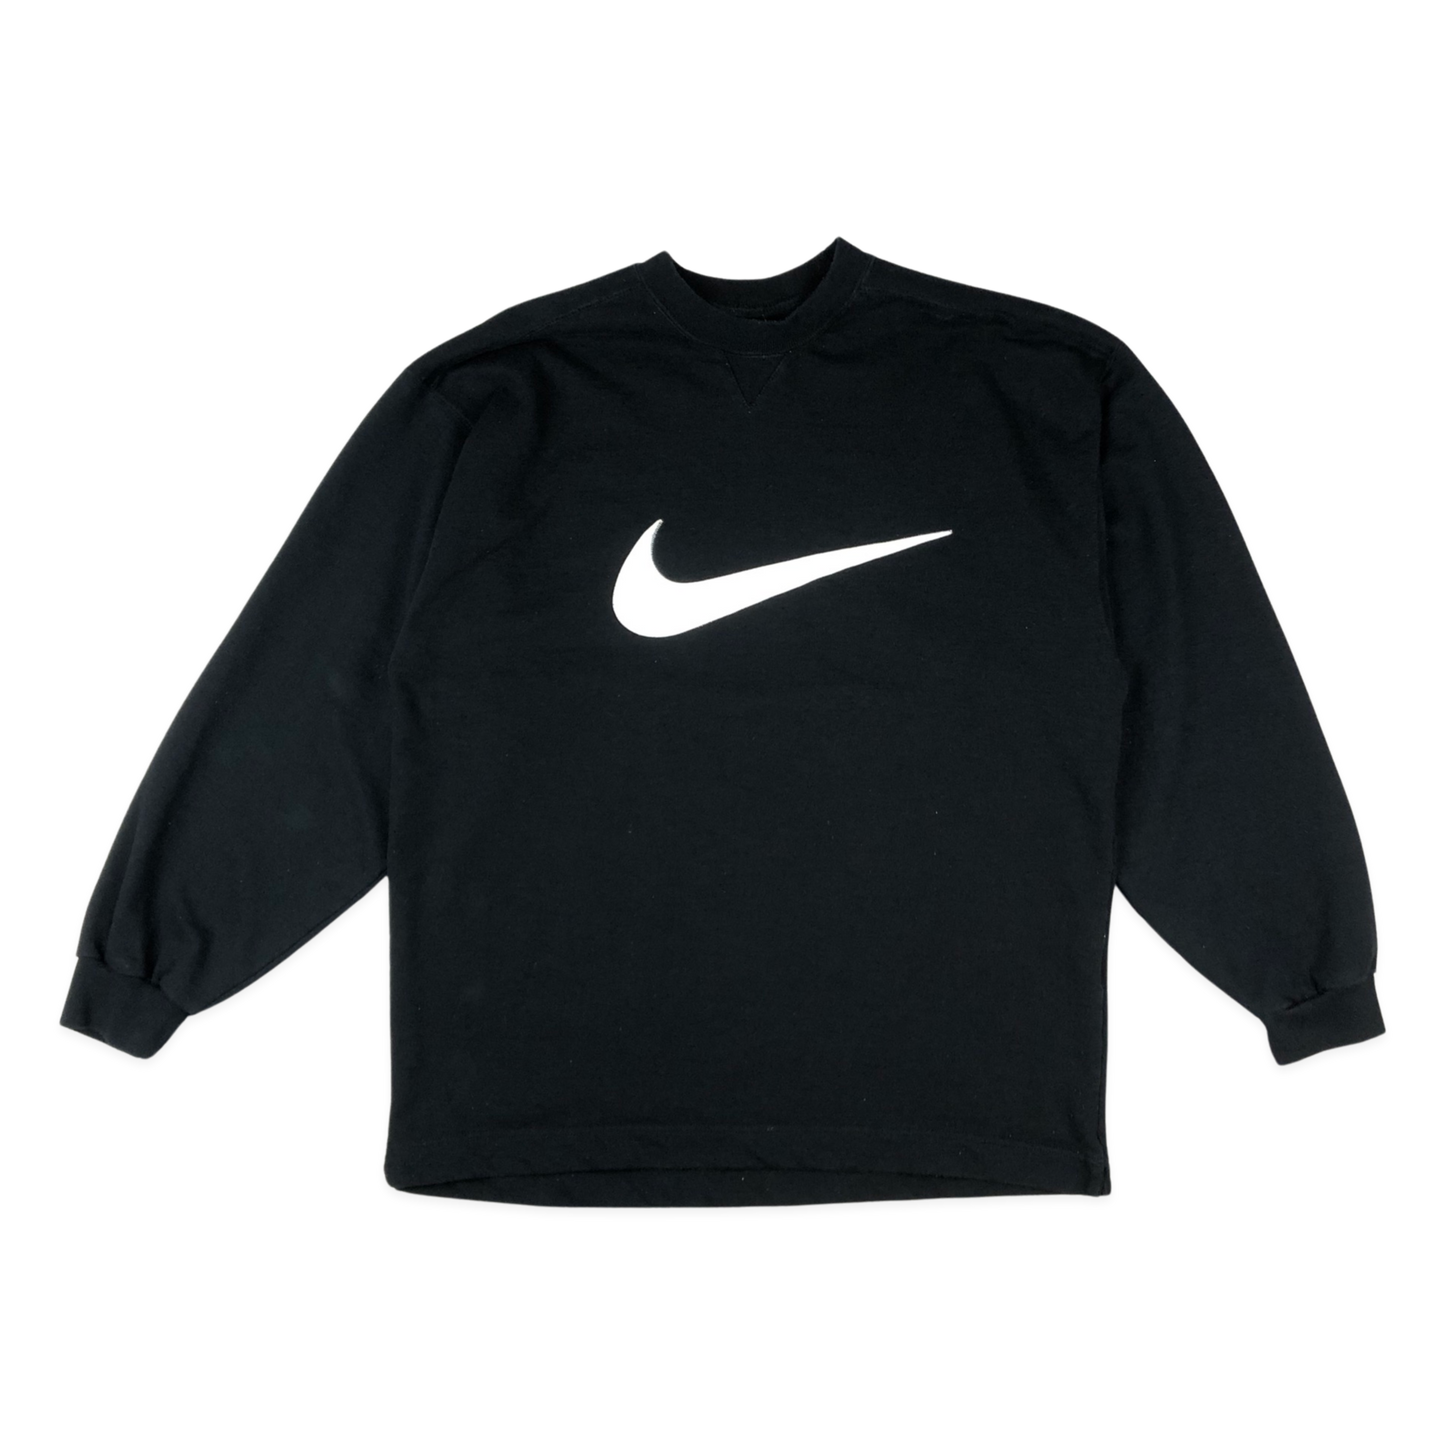 Vintage 90s Nike Black Swoosh Sweatshirt